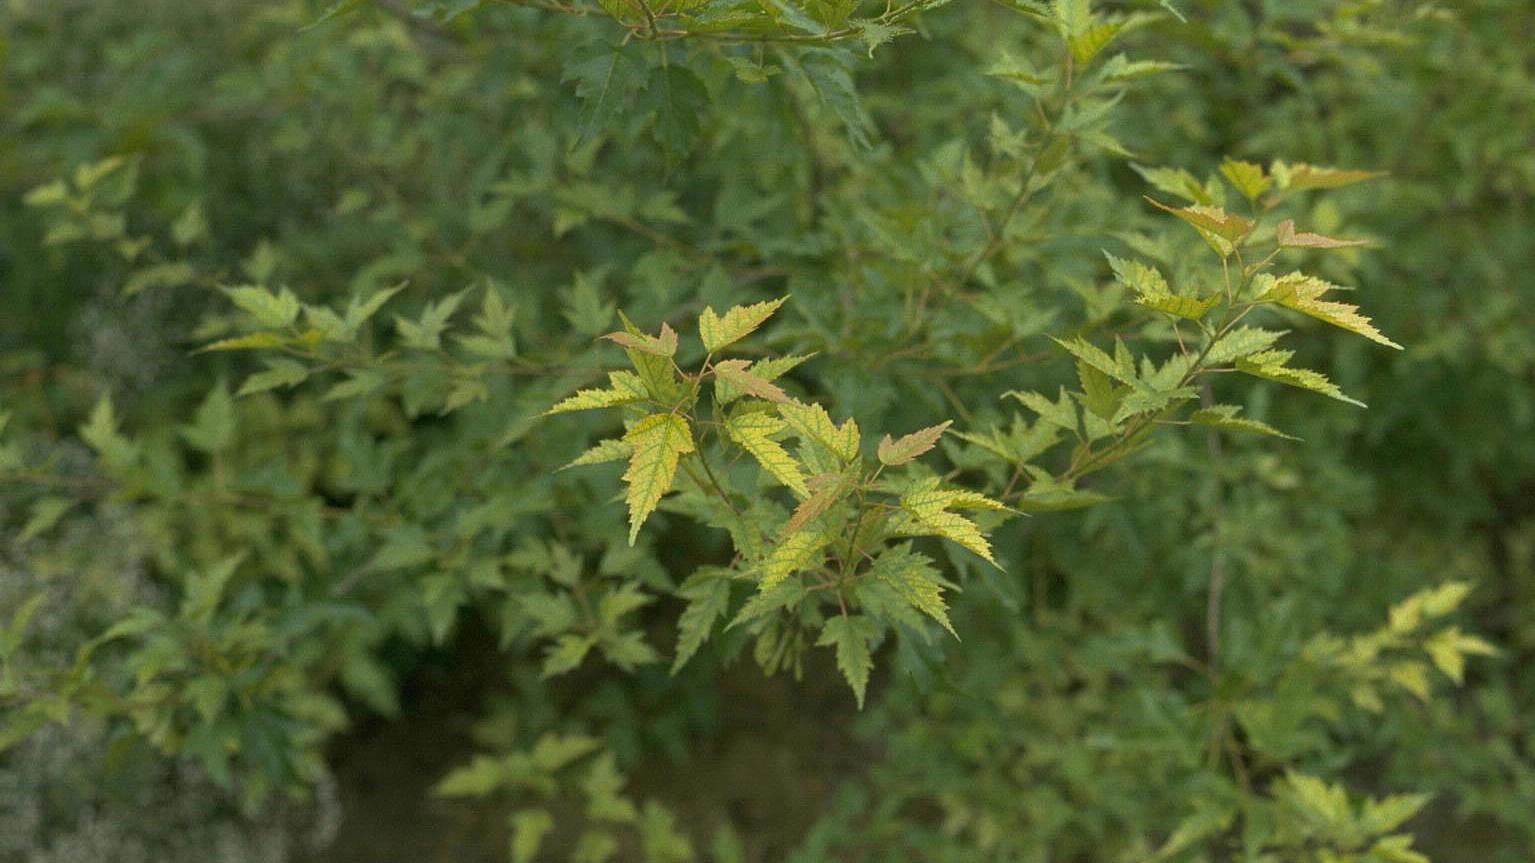 nutrient deficiency symptoms - yellowing leaves on maple tree